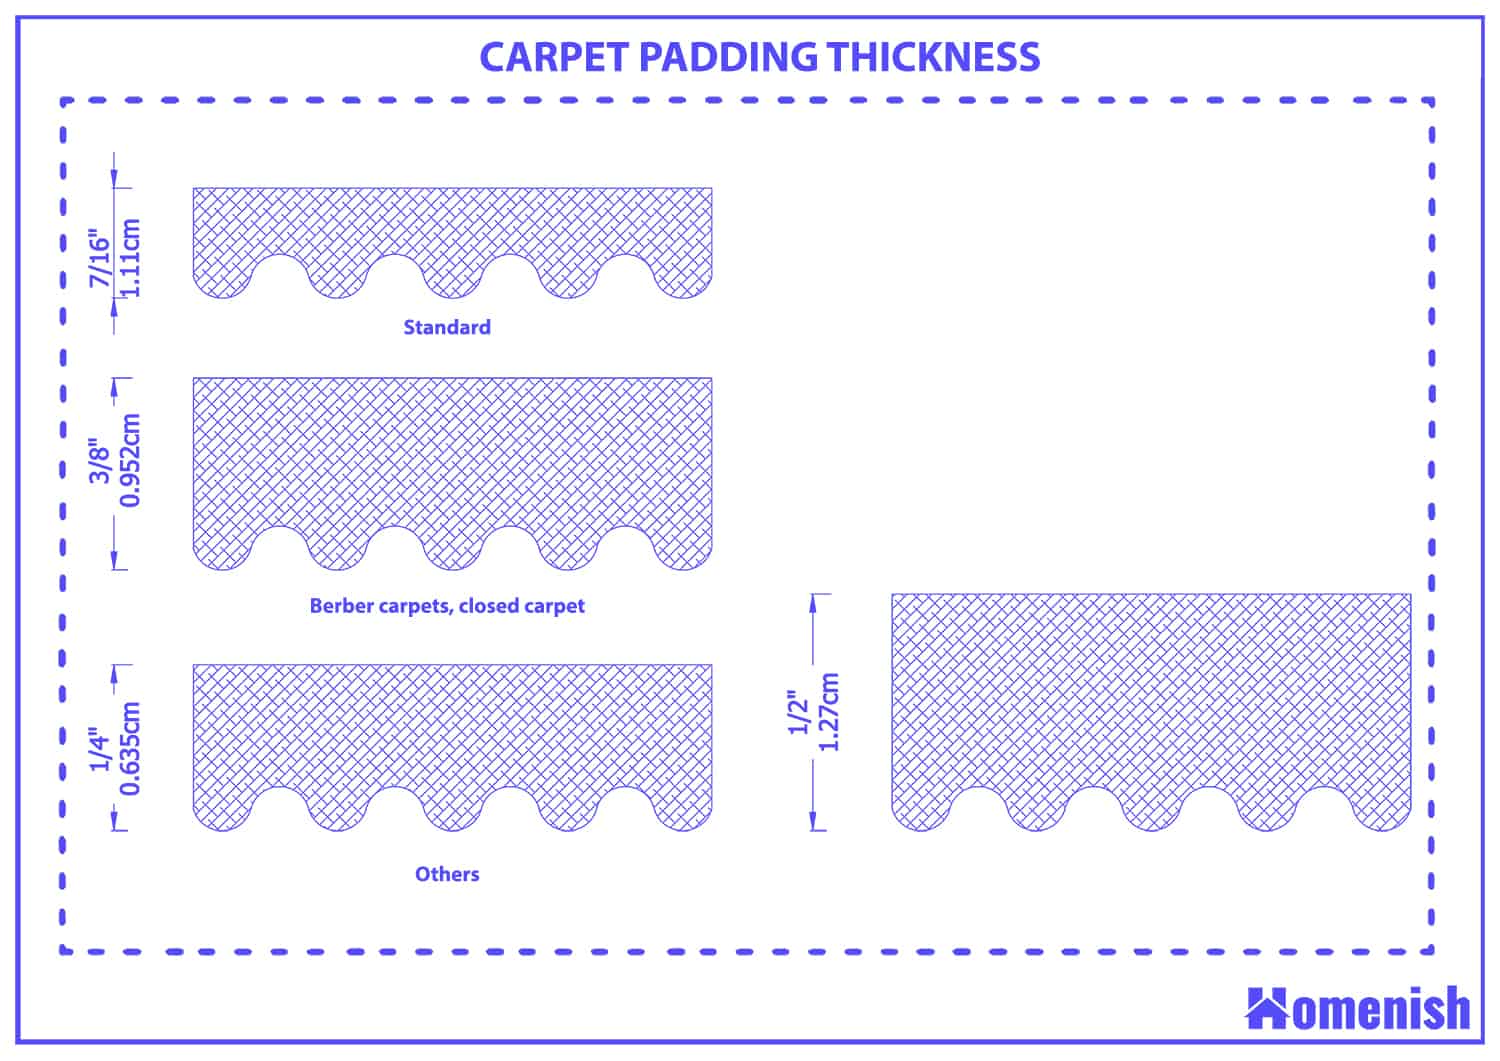 Carpet padding thickness